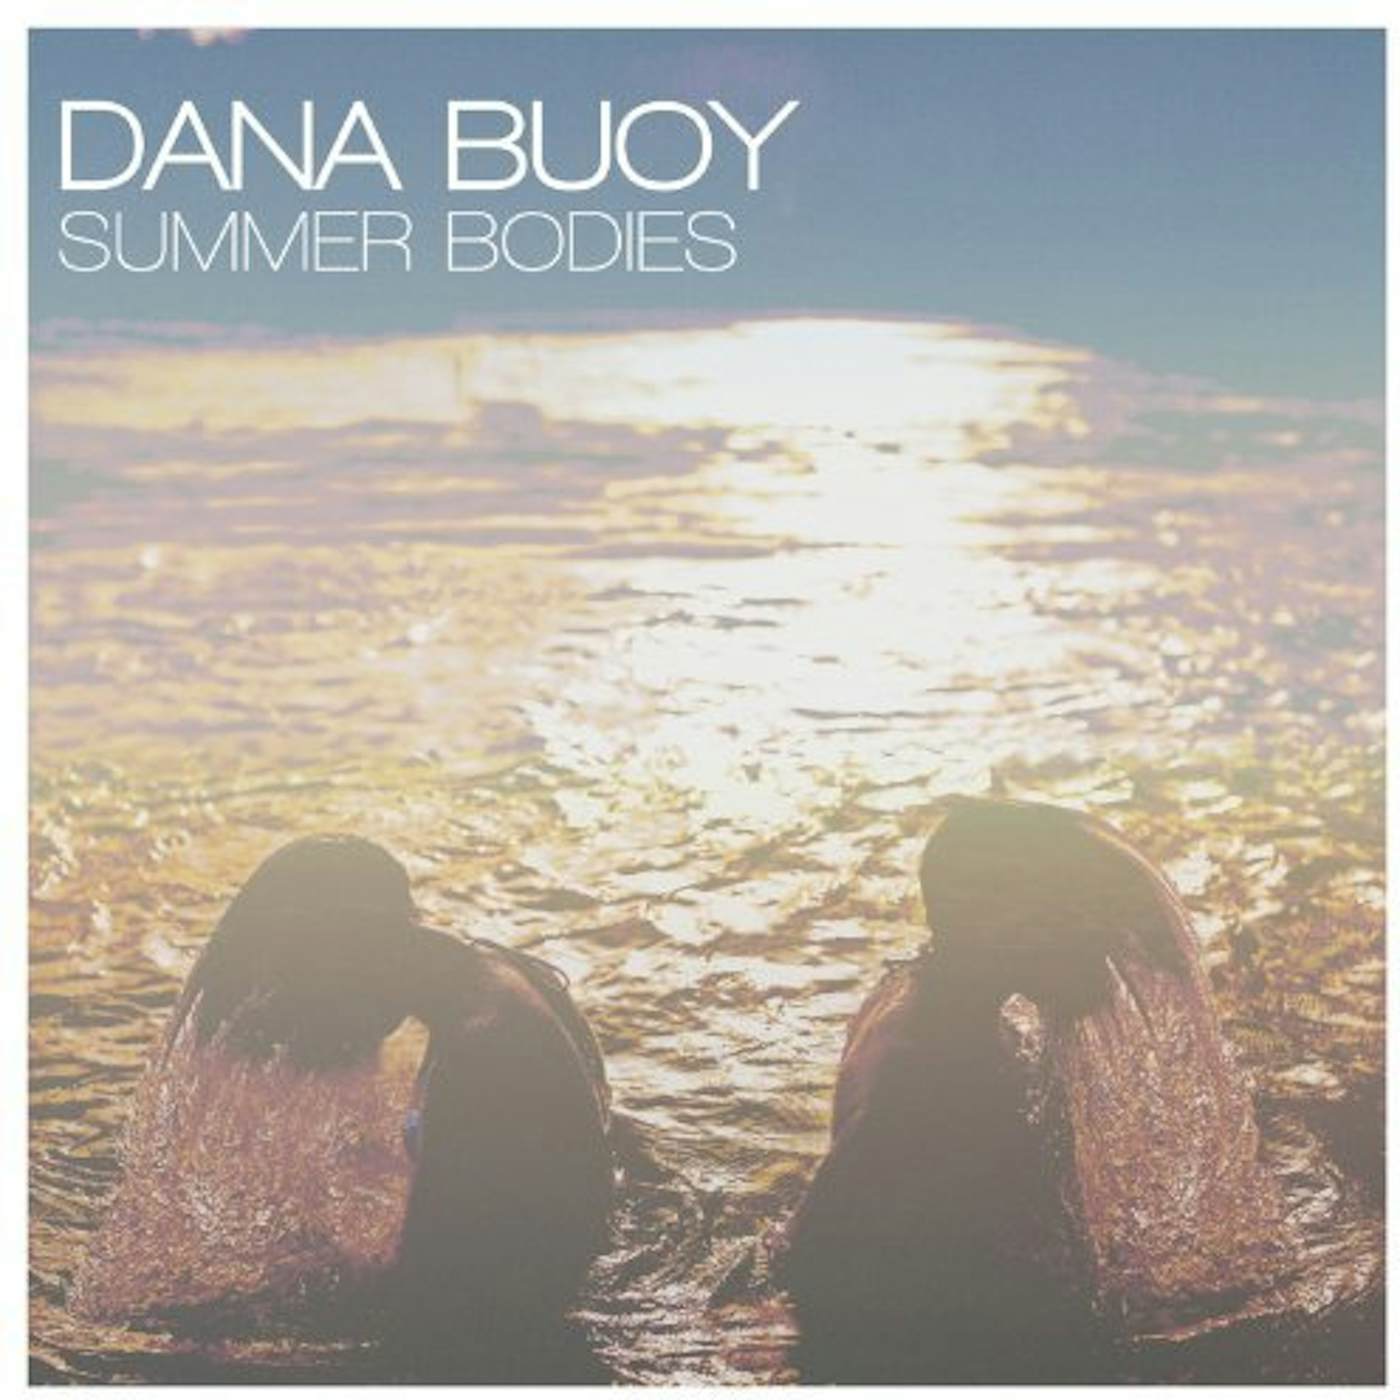 Dana Buoy Summer Bodies Vinyl Record